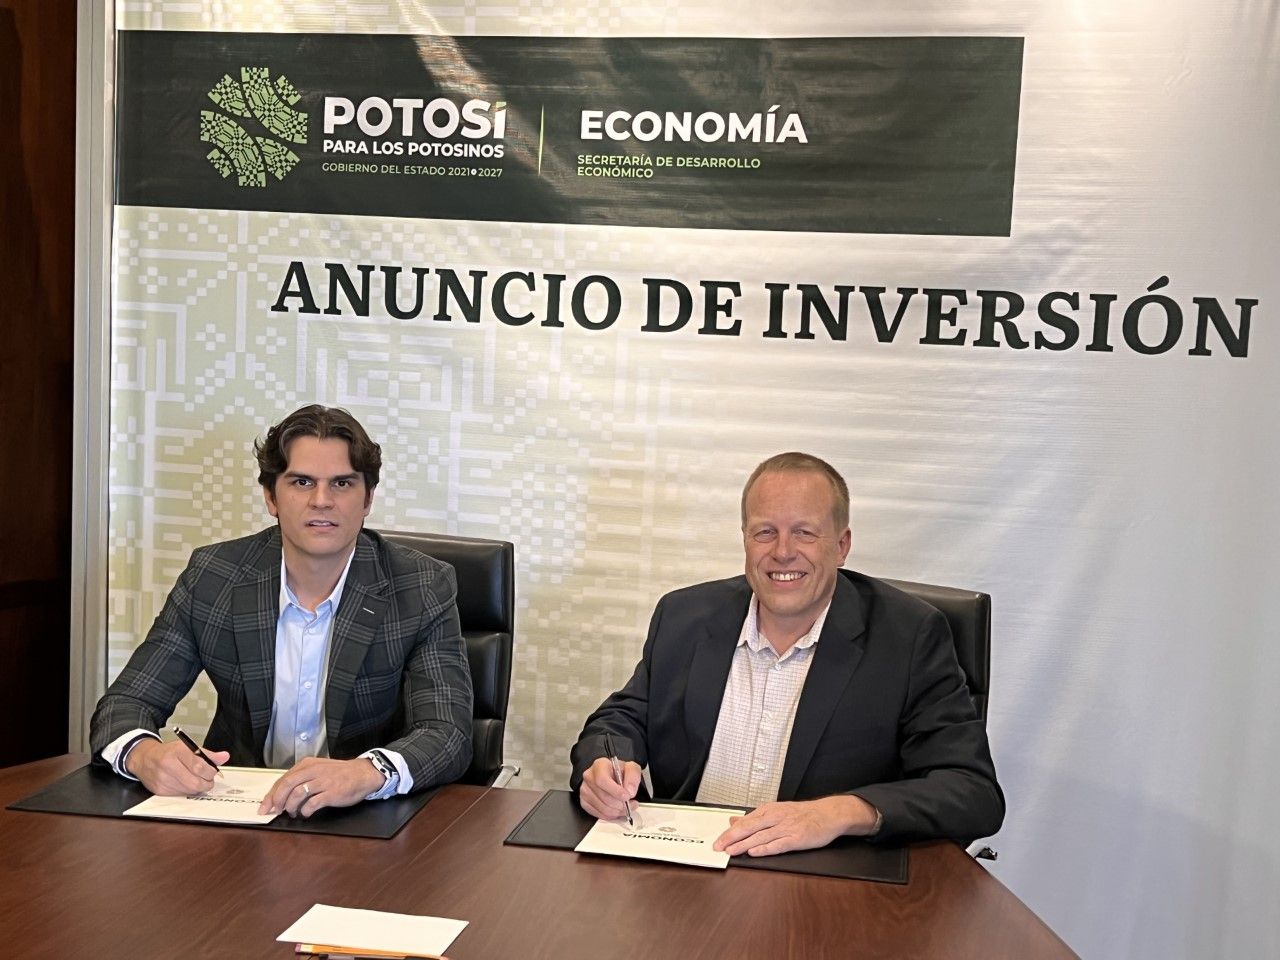 Juan Carlos Valladares Eichelmann, Secretary of Economic Development, and Olaf Voss, CEO of thyssenkrupp Materials de Mexico, signing the agreement.